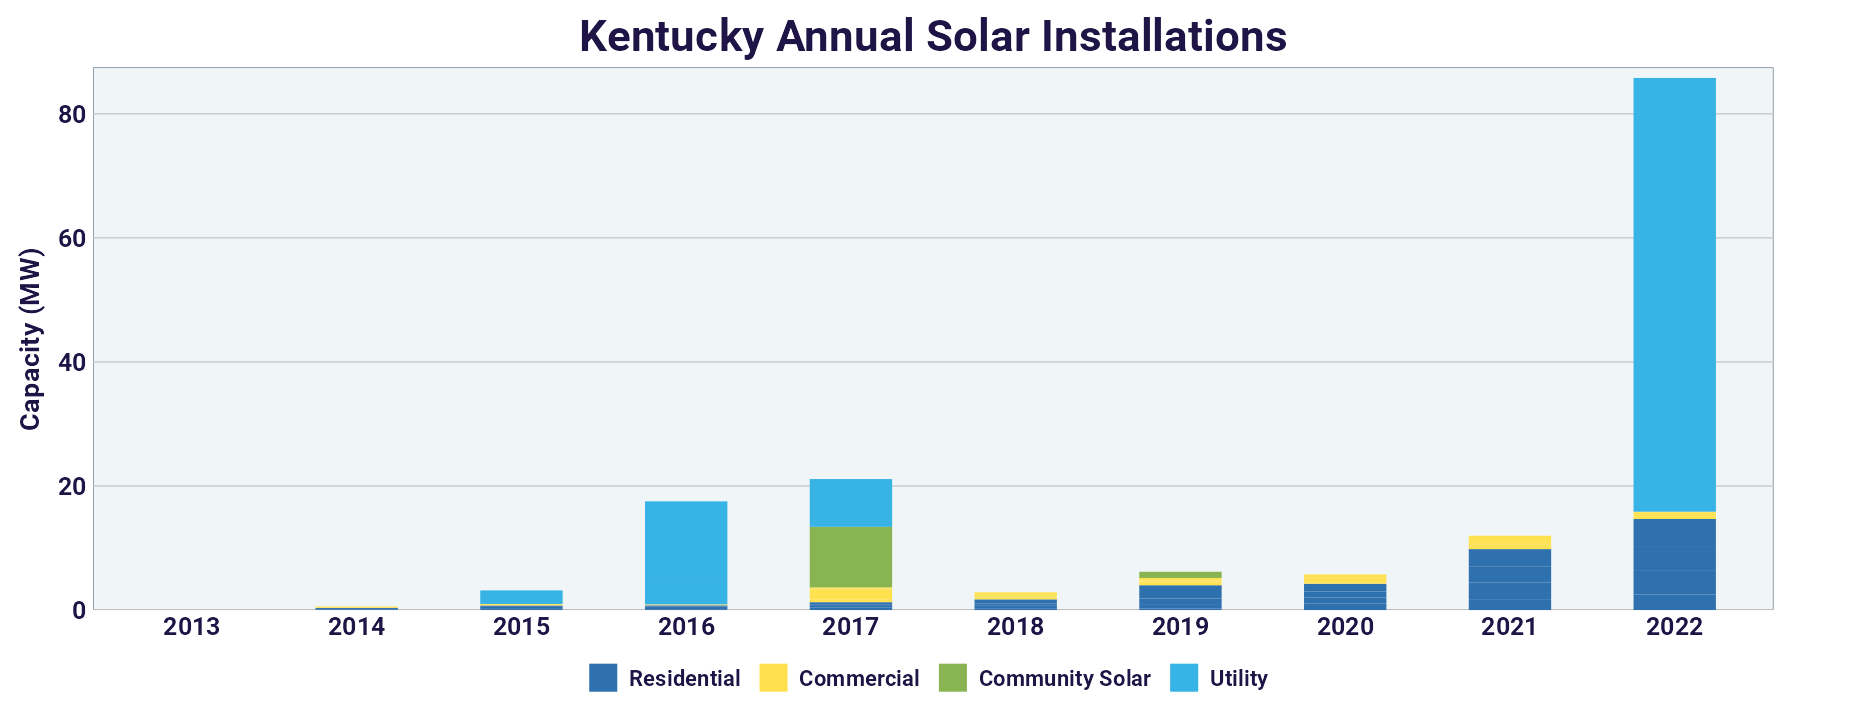 Kentucky Annual Solar Installations